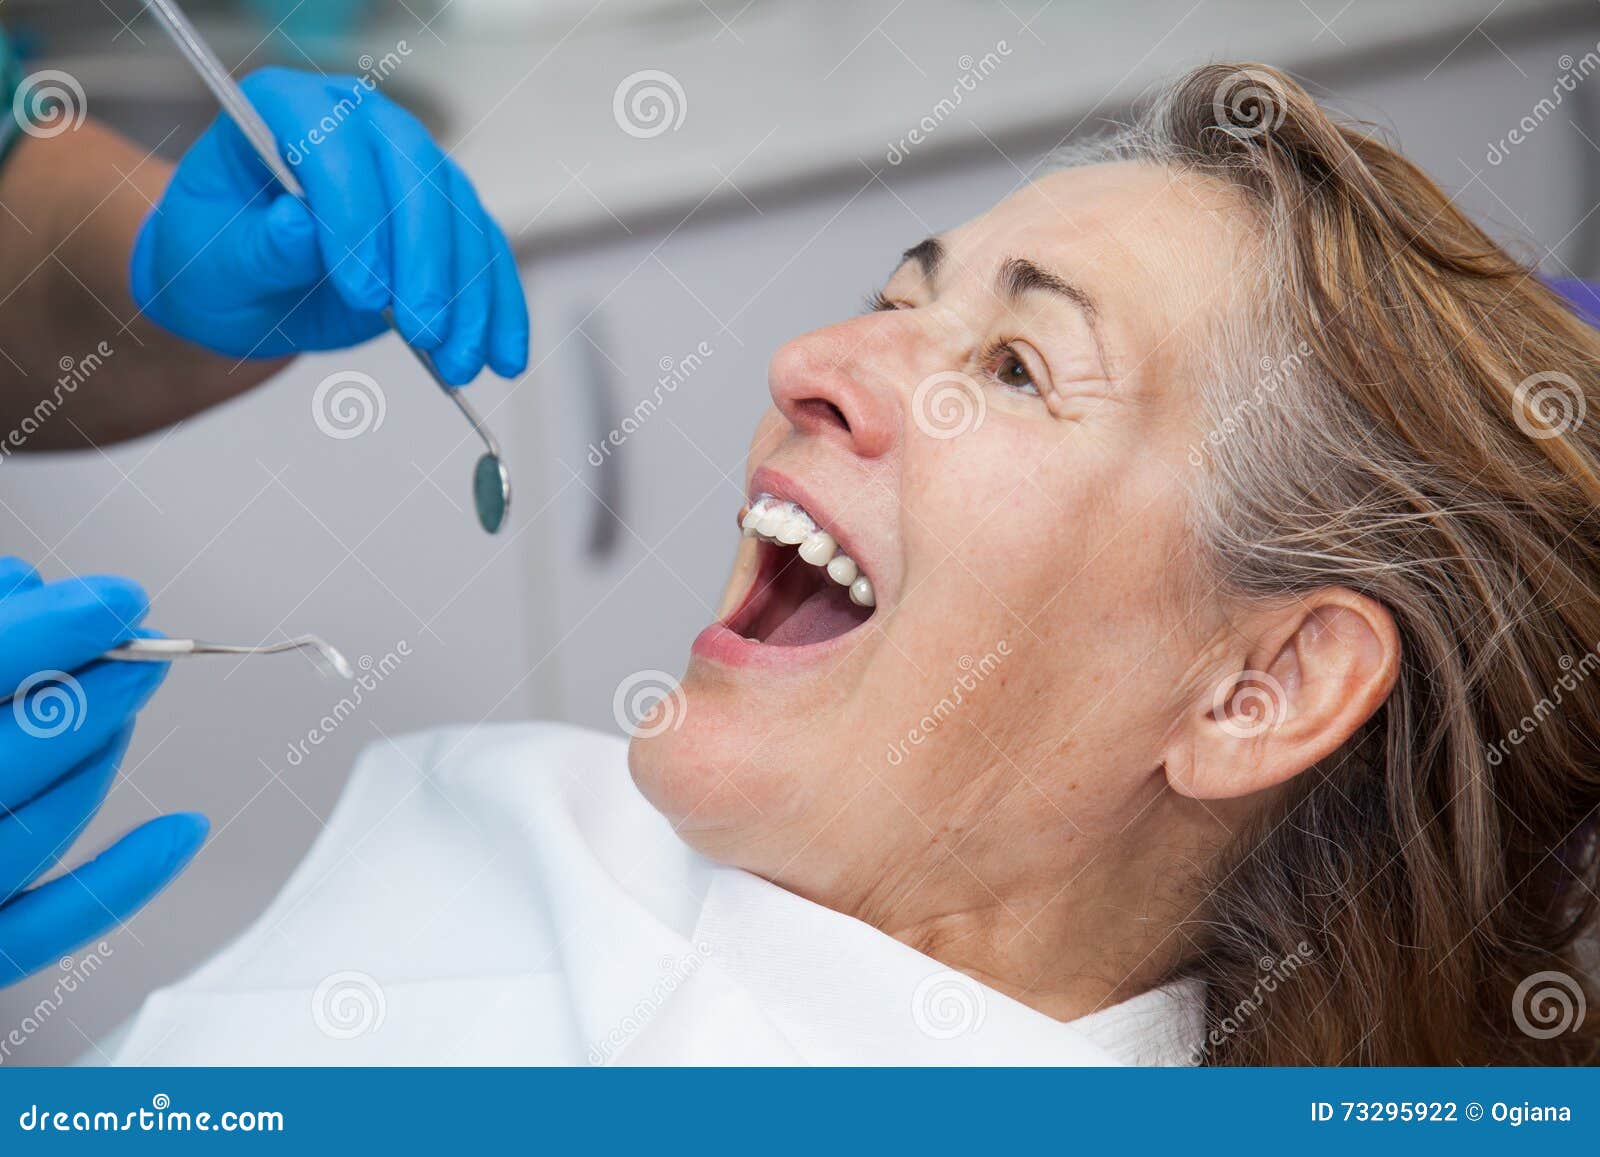 treatment of gingivitis at the dentist